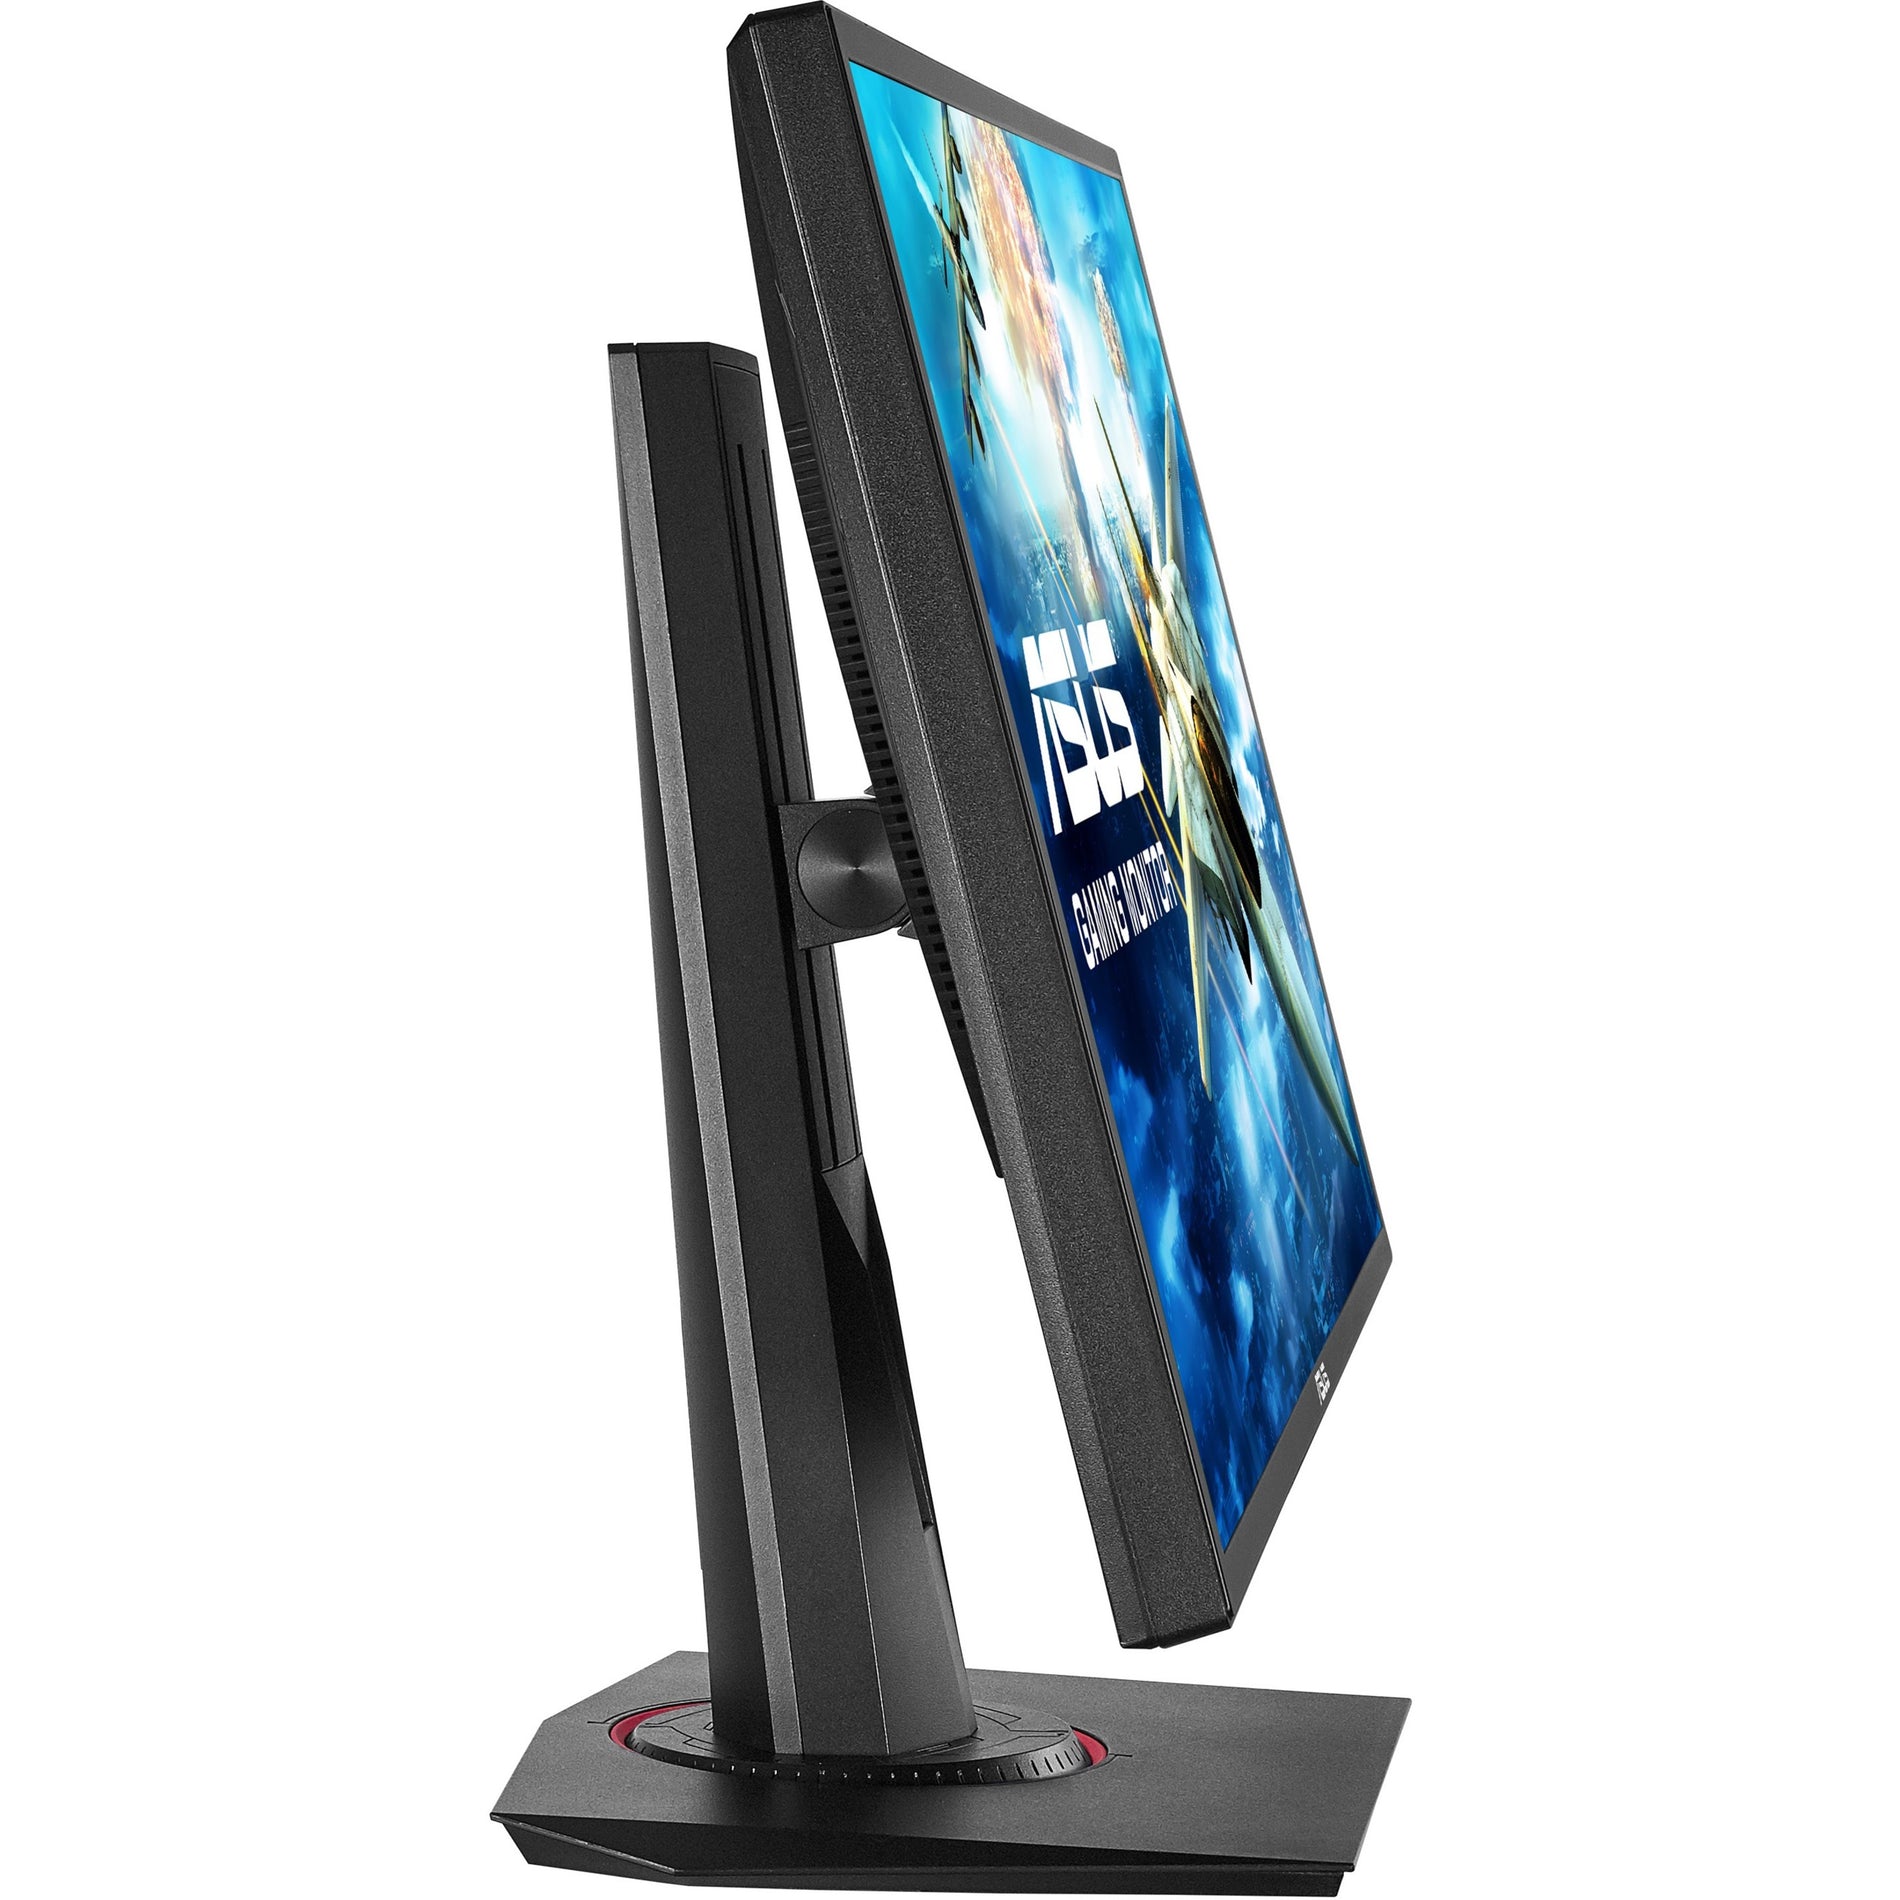 Asus VG248QG Gaming LCD Monitor - Full HD, 24", G-Sync, 120Hz Refresh Rate